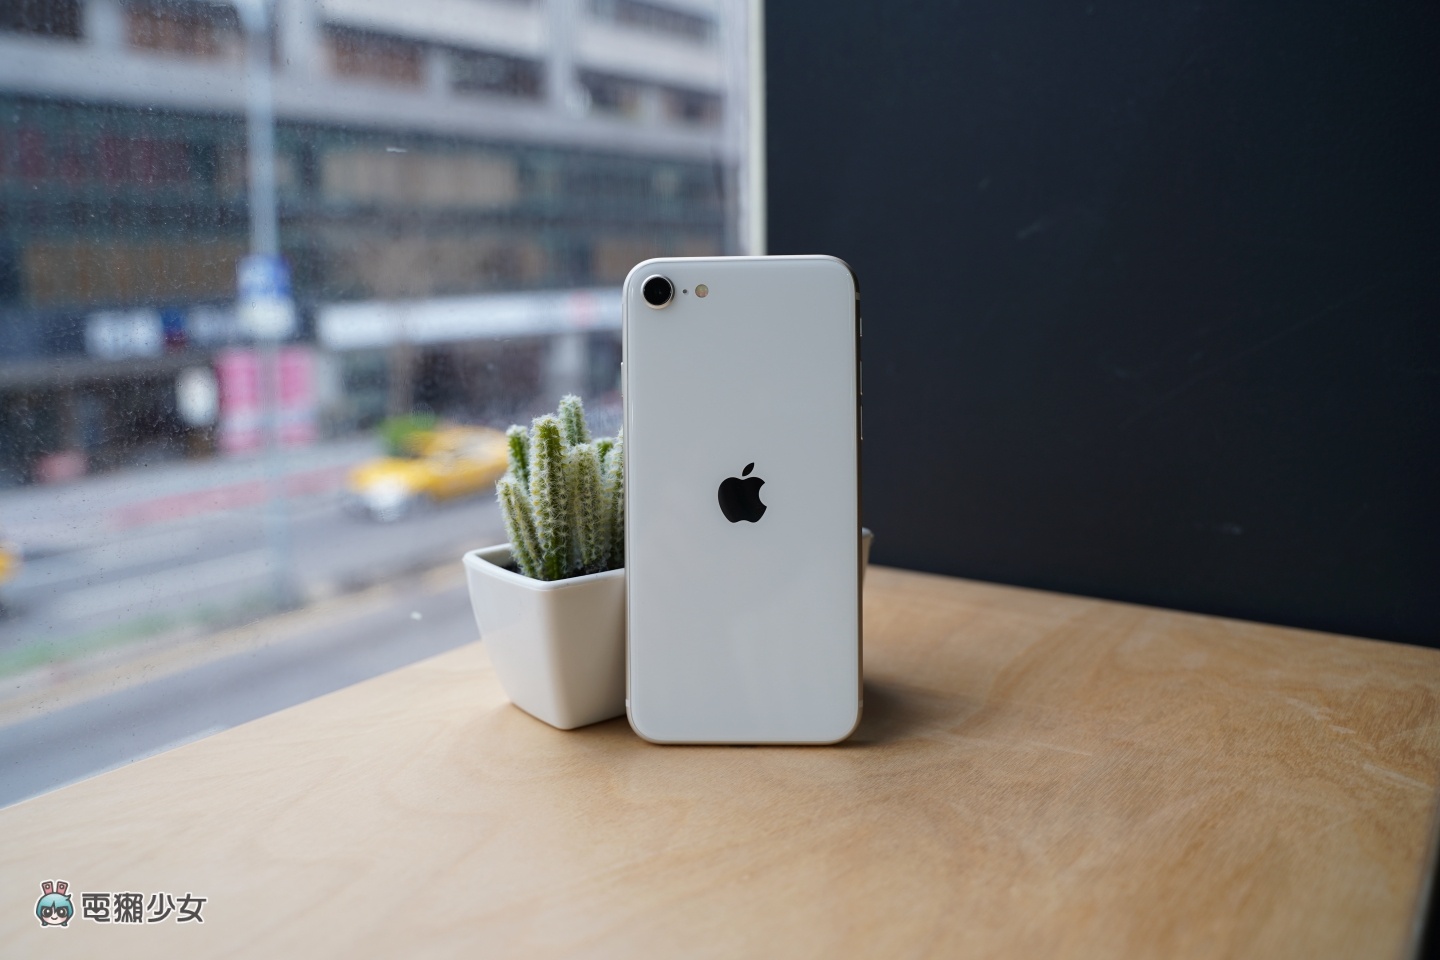 iPhone SE 3 在美國銷量低於預期 調研機構認為是蘋果『 宣傳不足 』所致